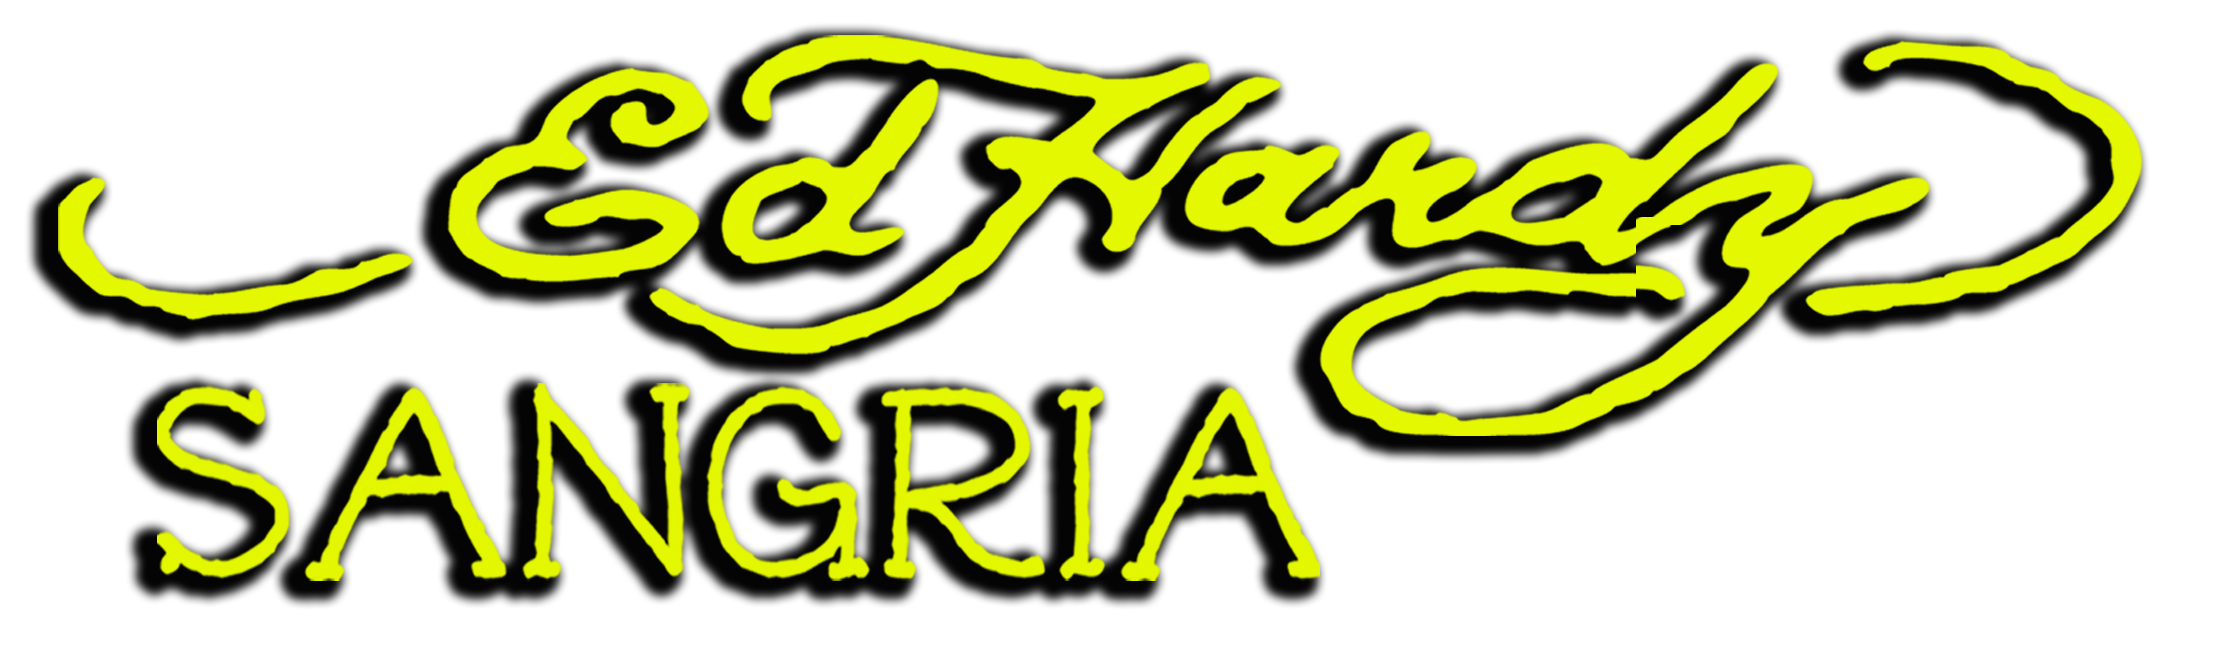 Ed Hardy Sangria Logo